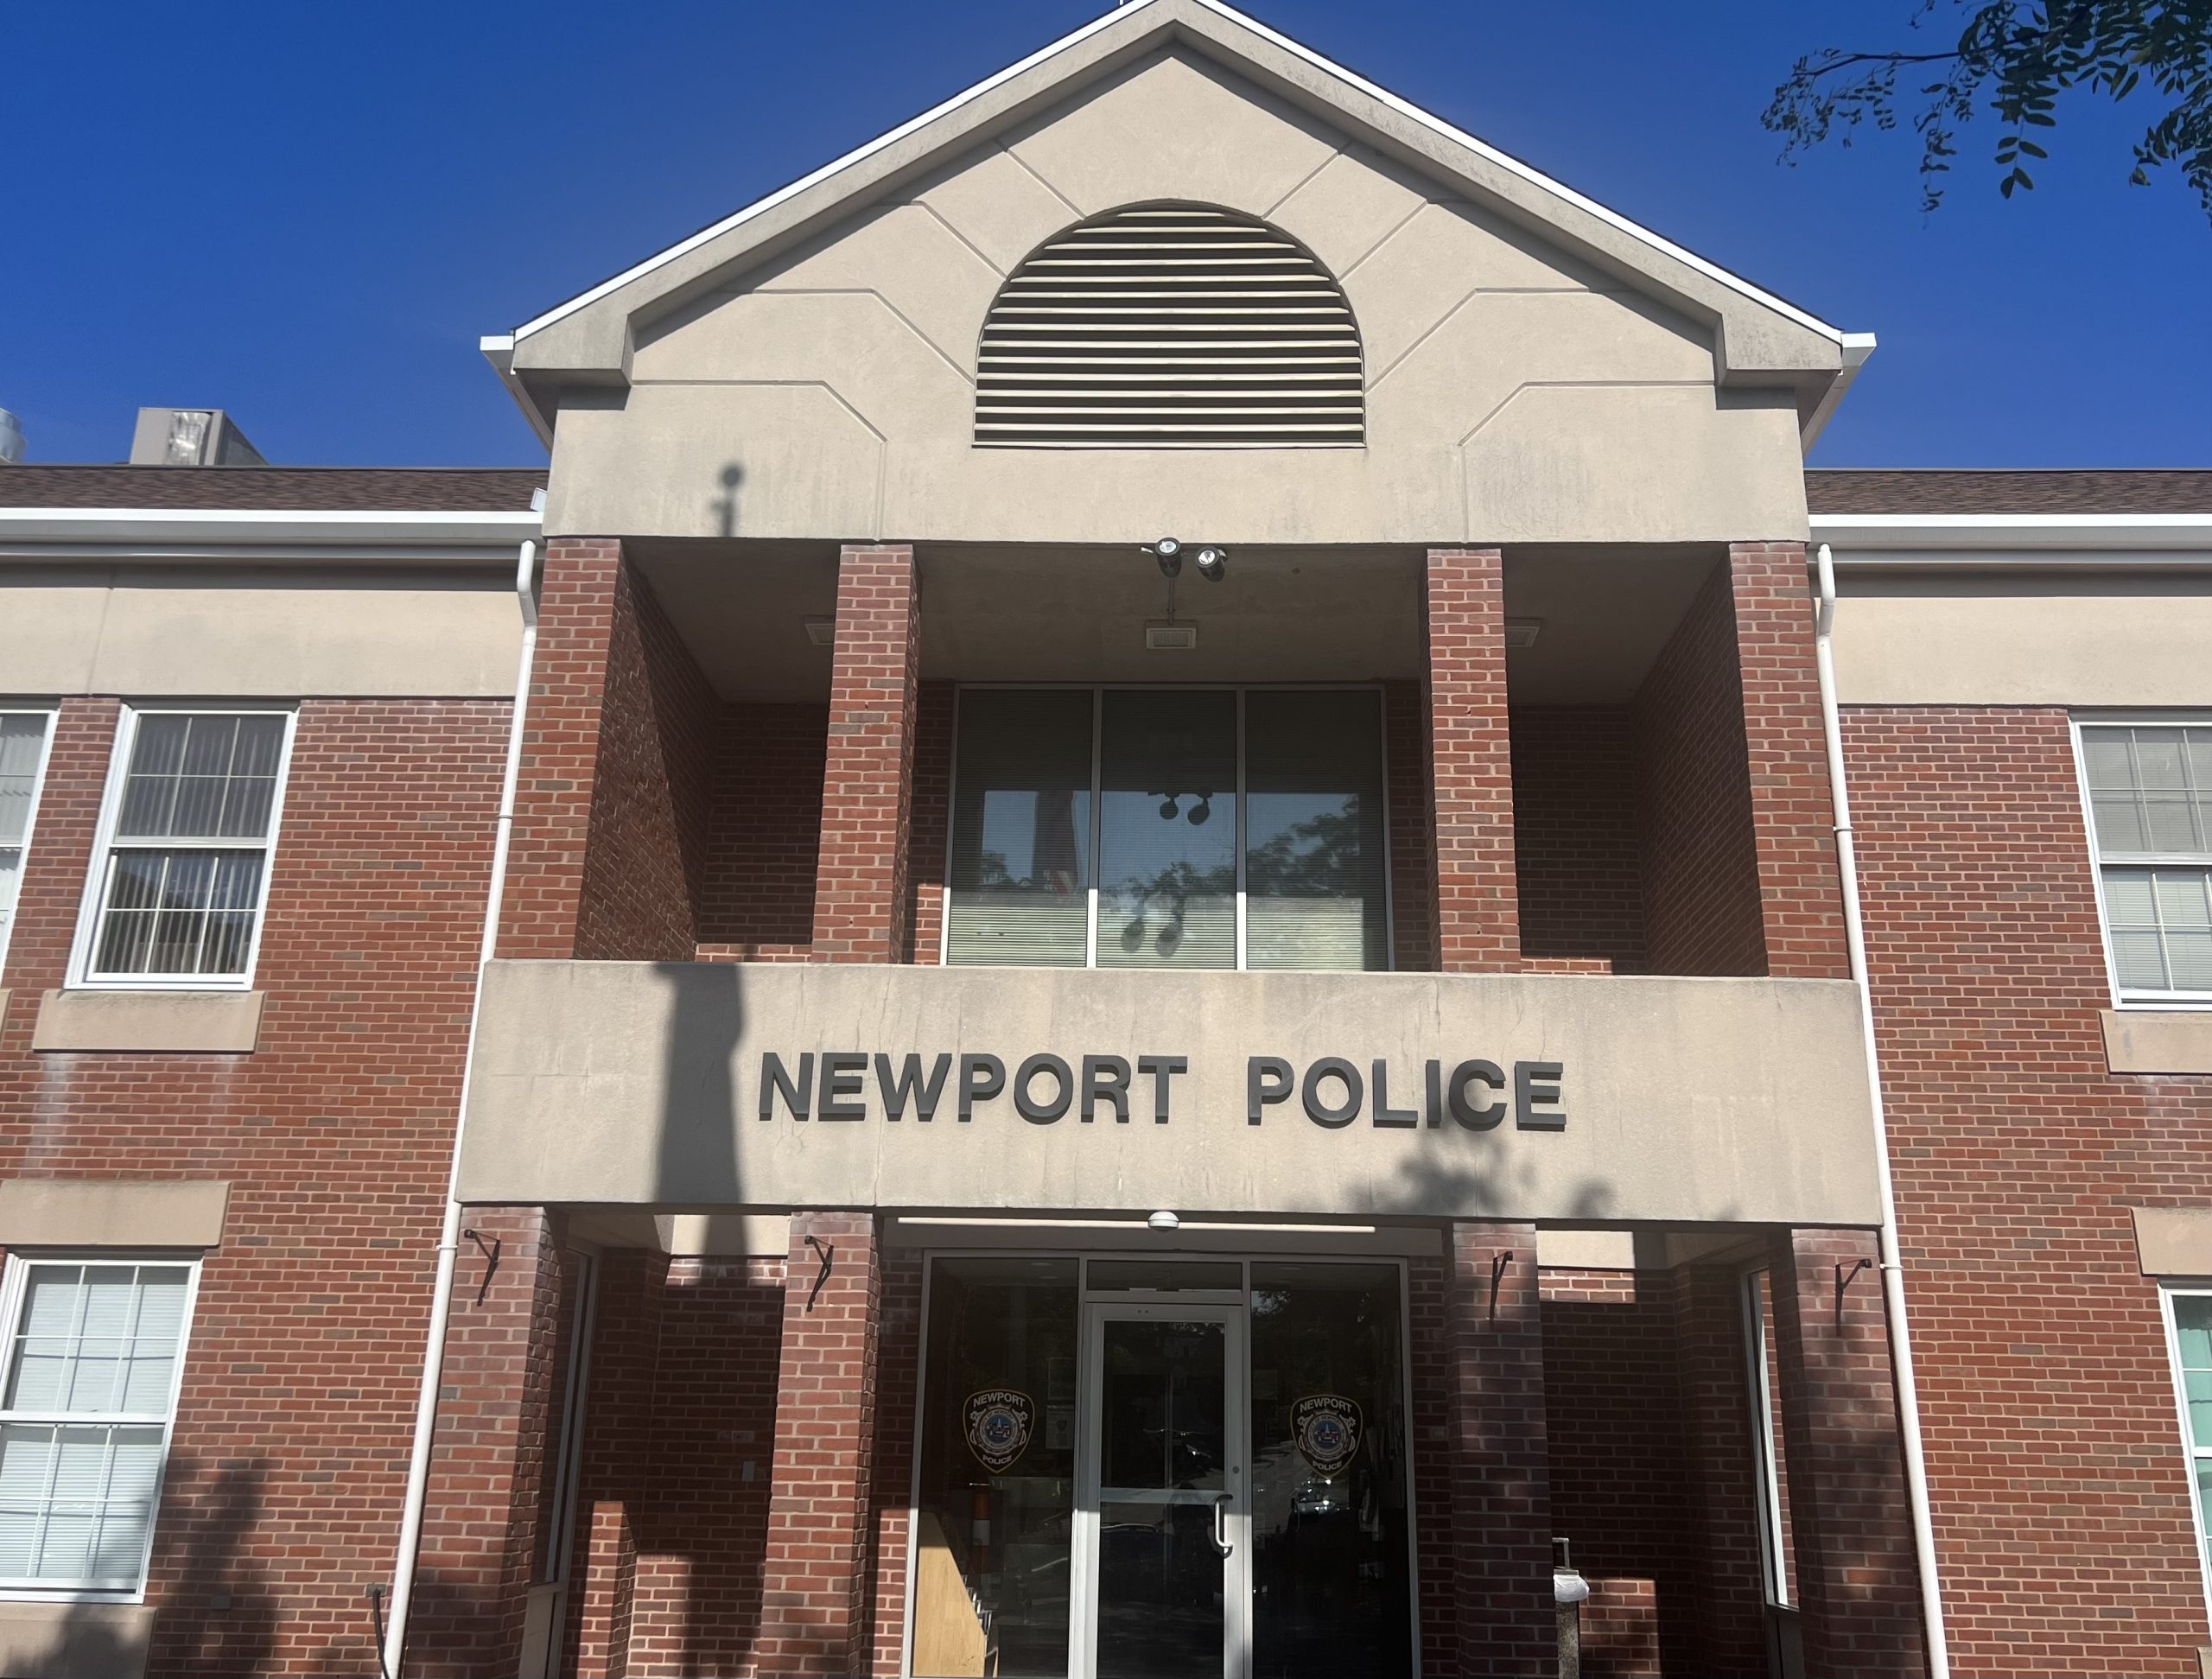  Newport Police arrest two Rhode Island men on stolen vehicle charges 